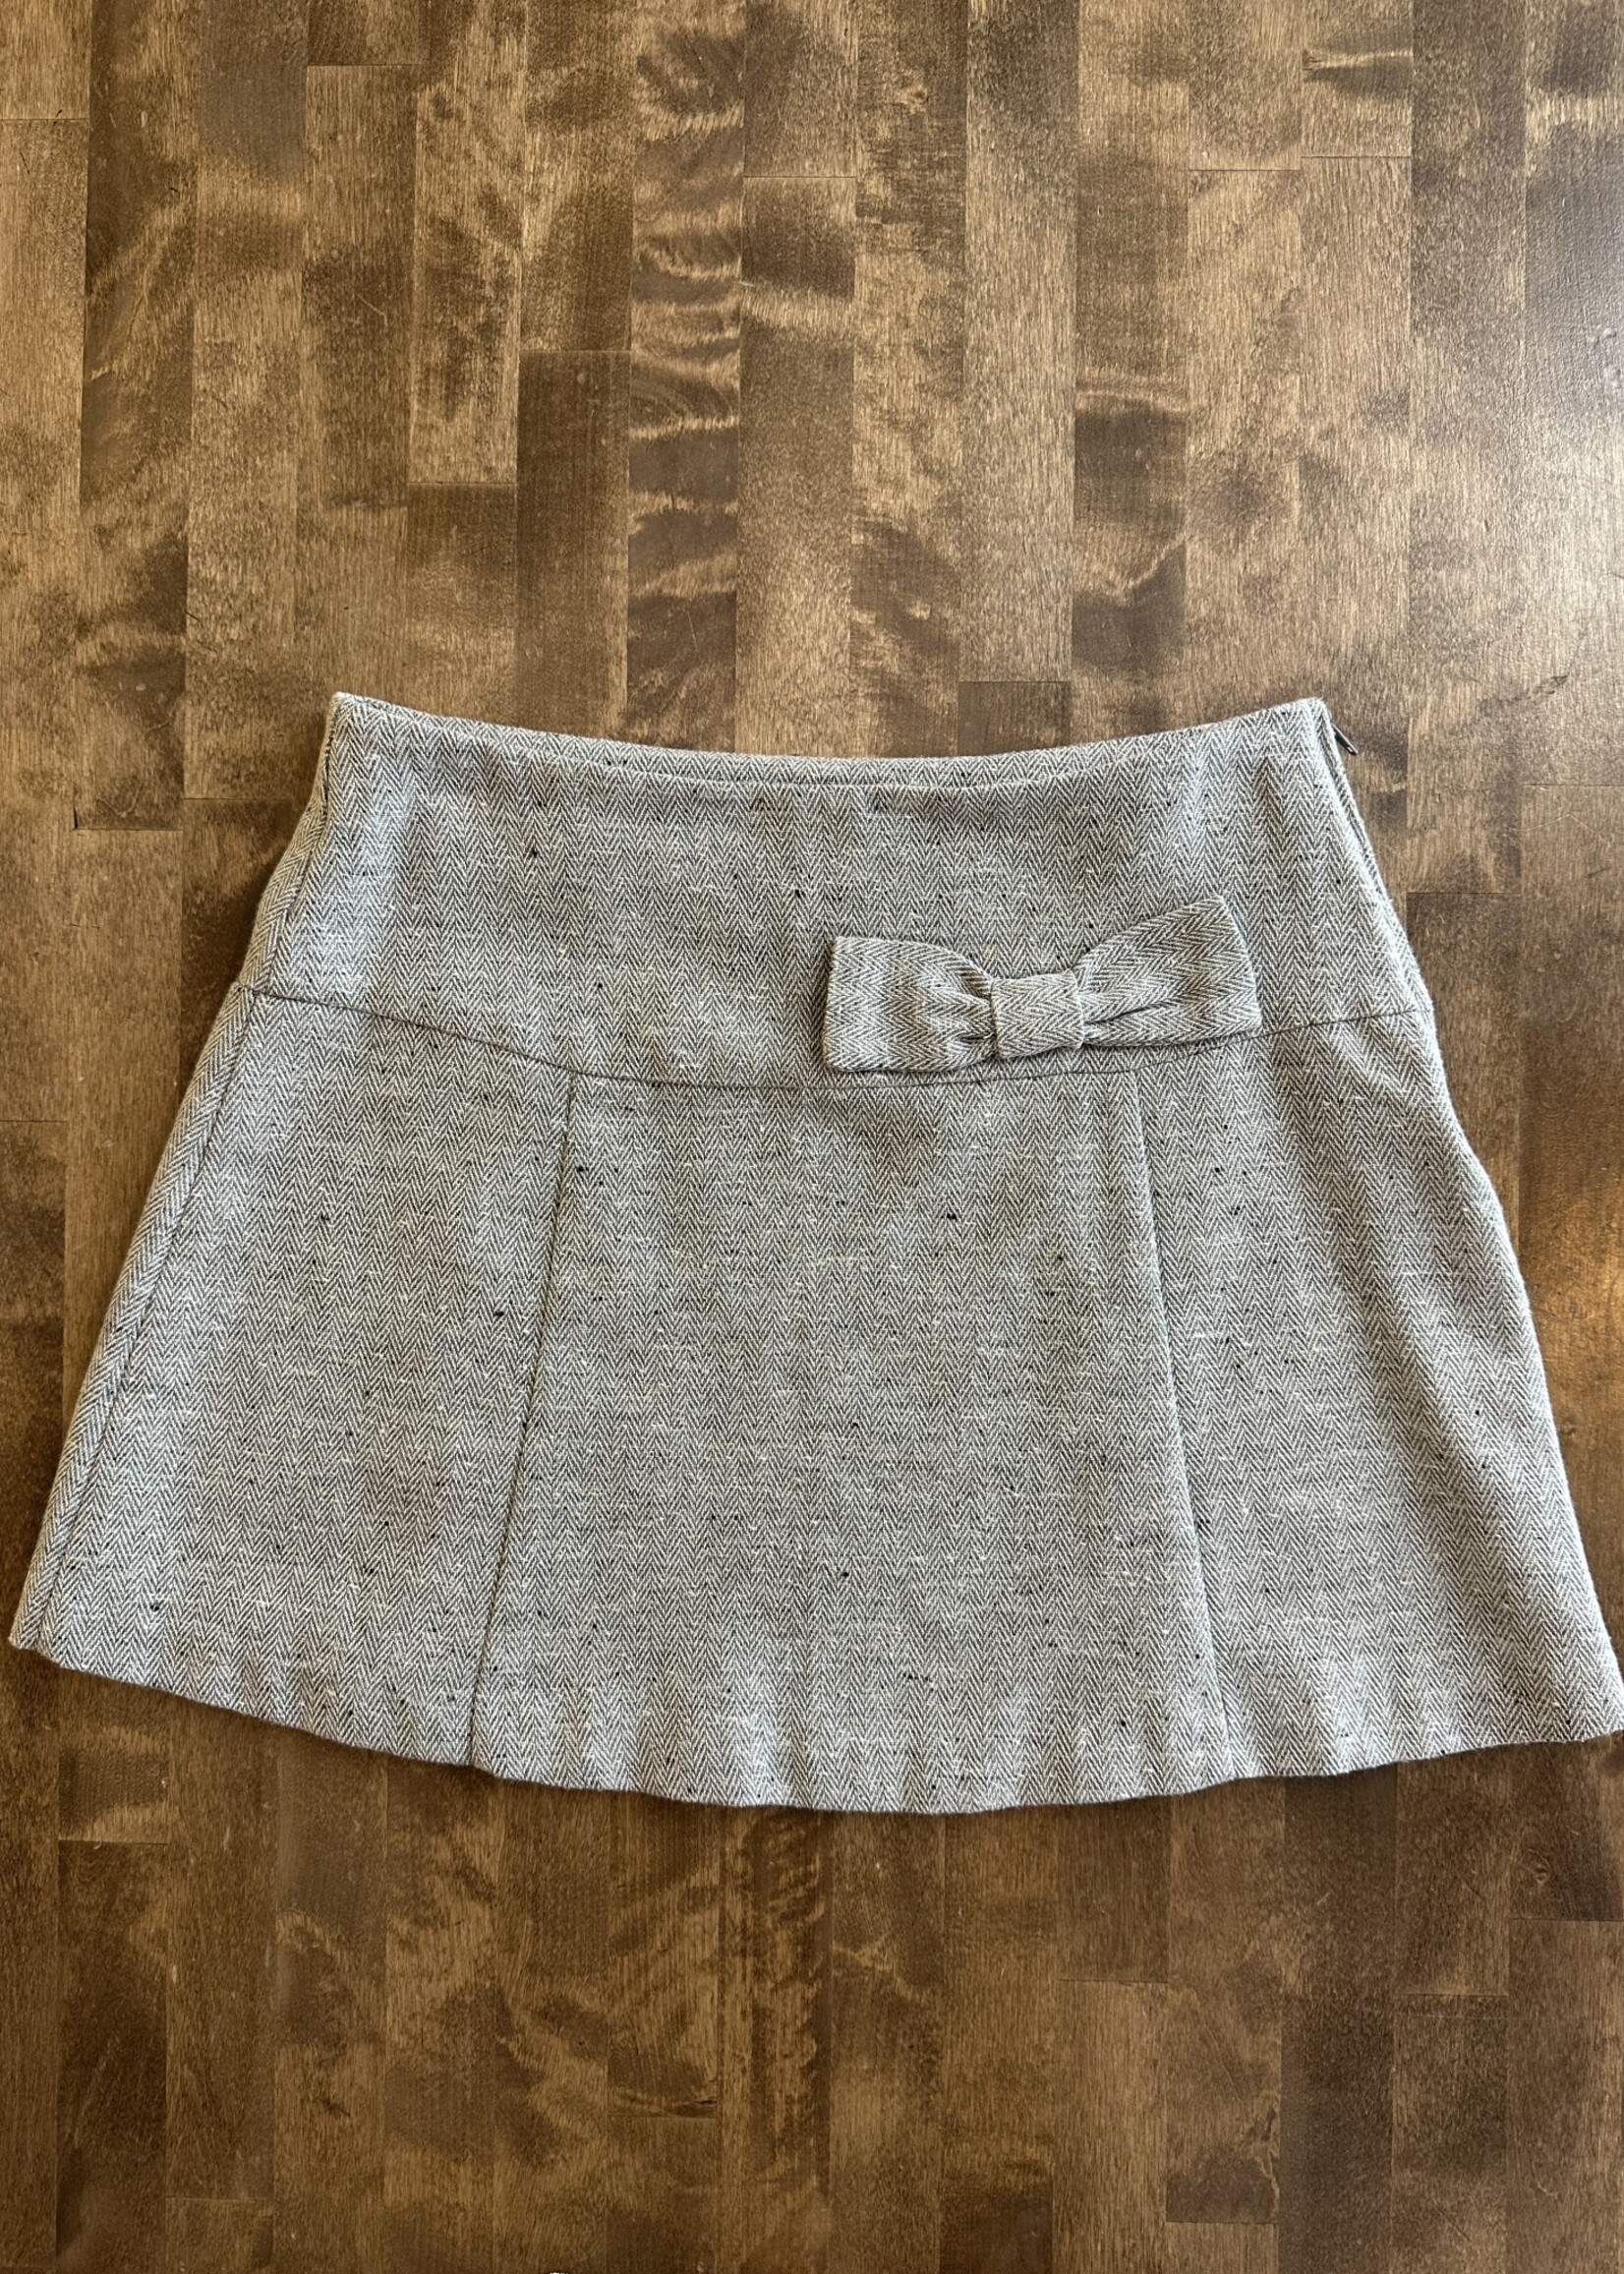 Hailee Grey Textured Skirt S 28